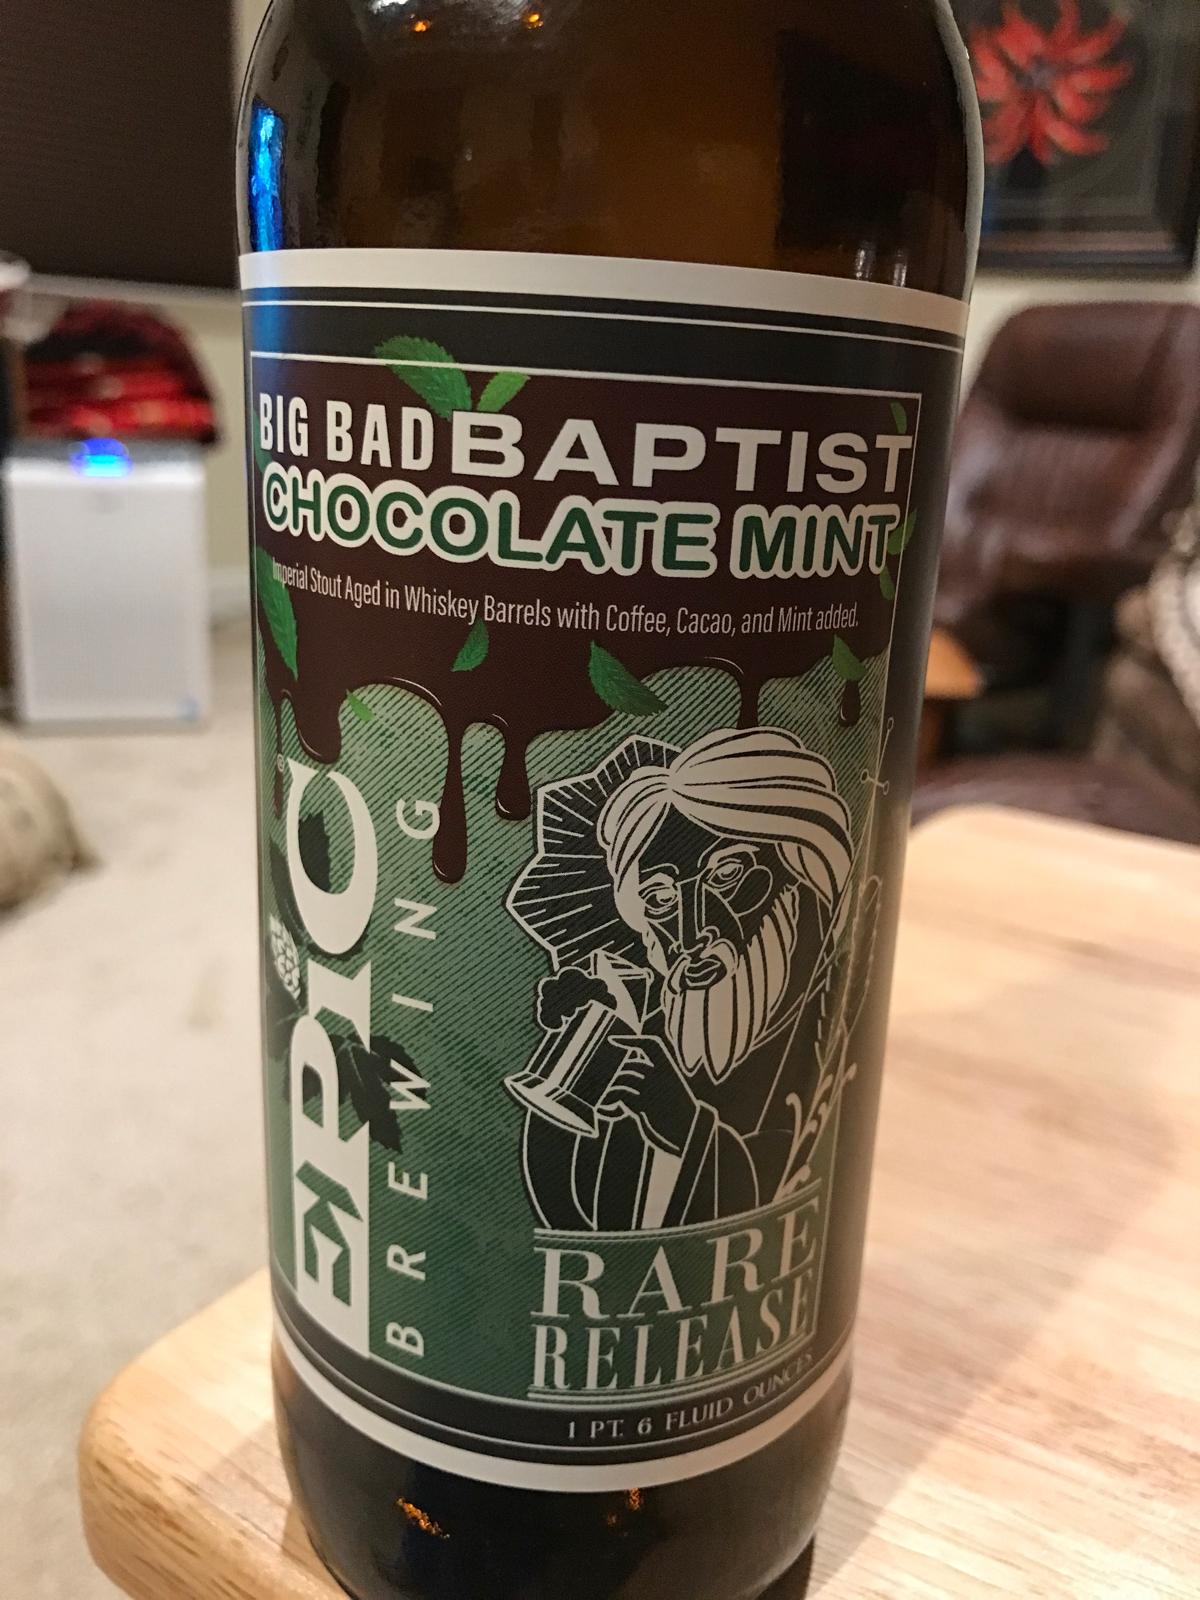 Big Bad Baptist Chocolate Mint